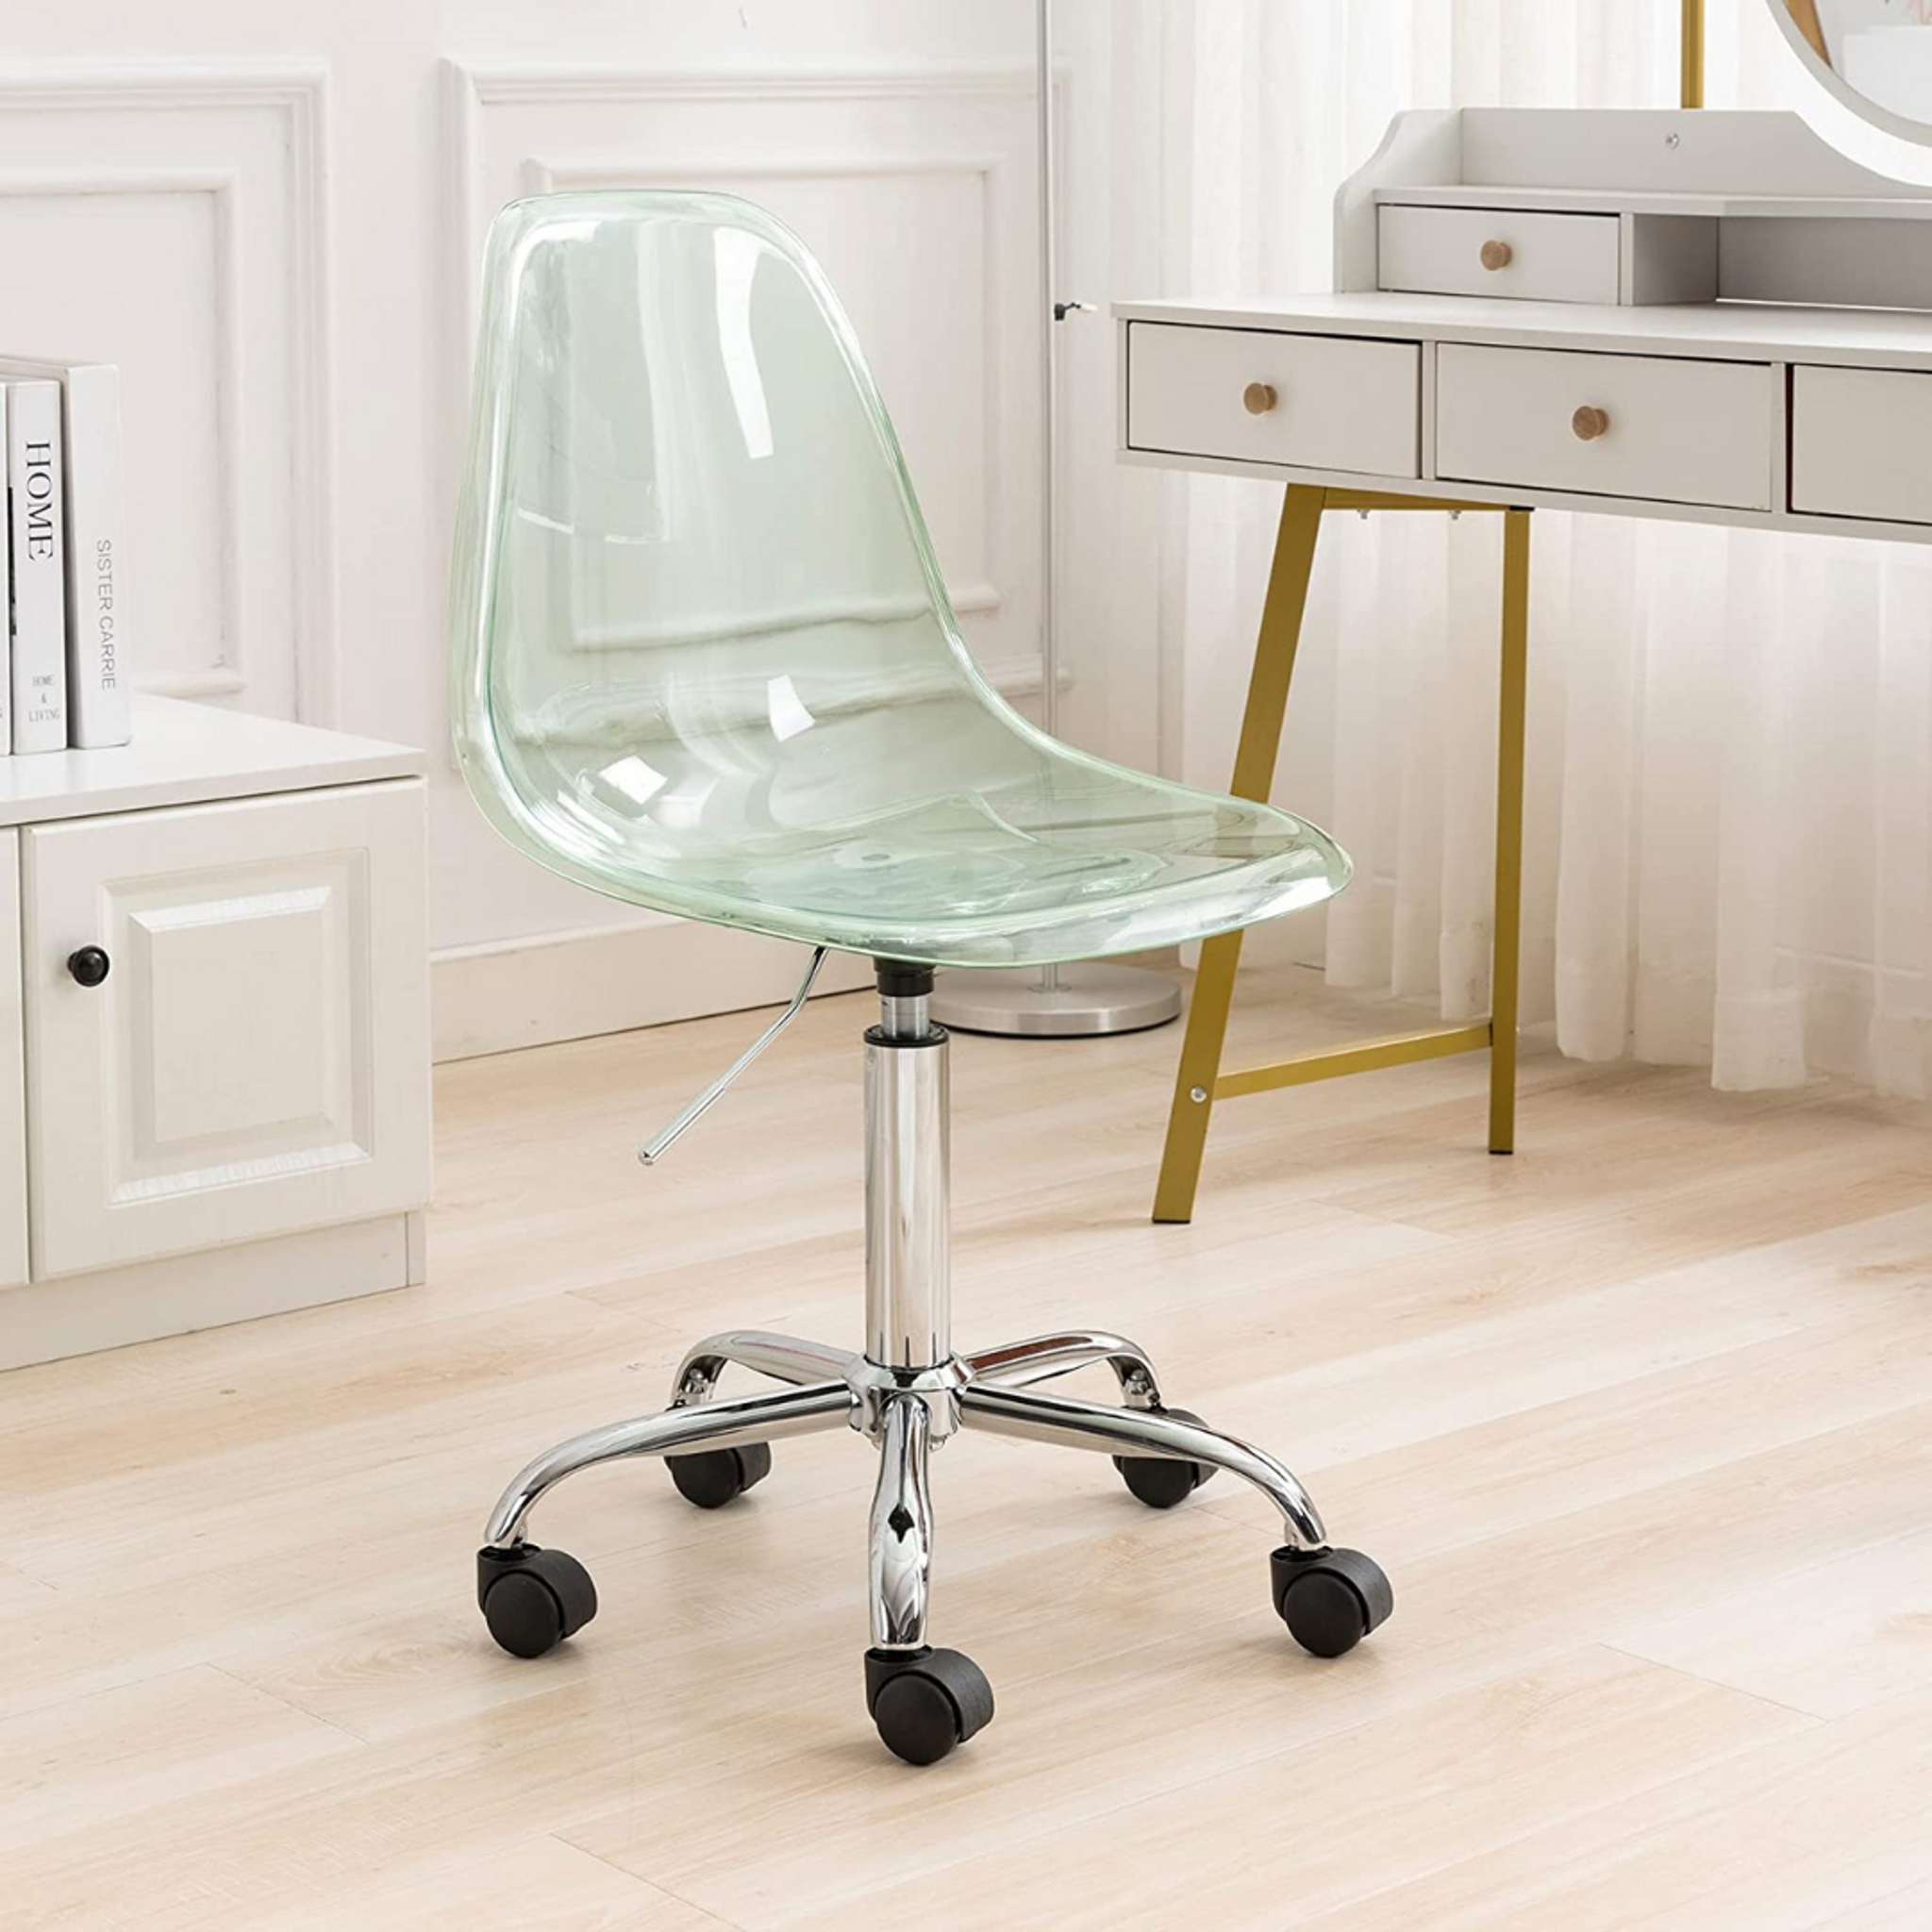 Mid Century Mint Green Acrylic Desk Chair with Chrome Base